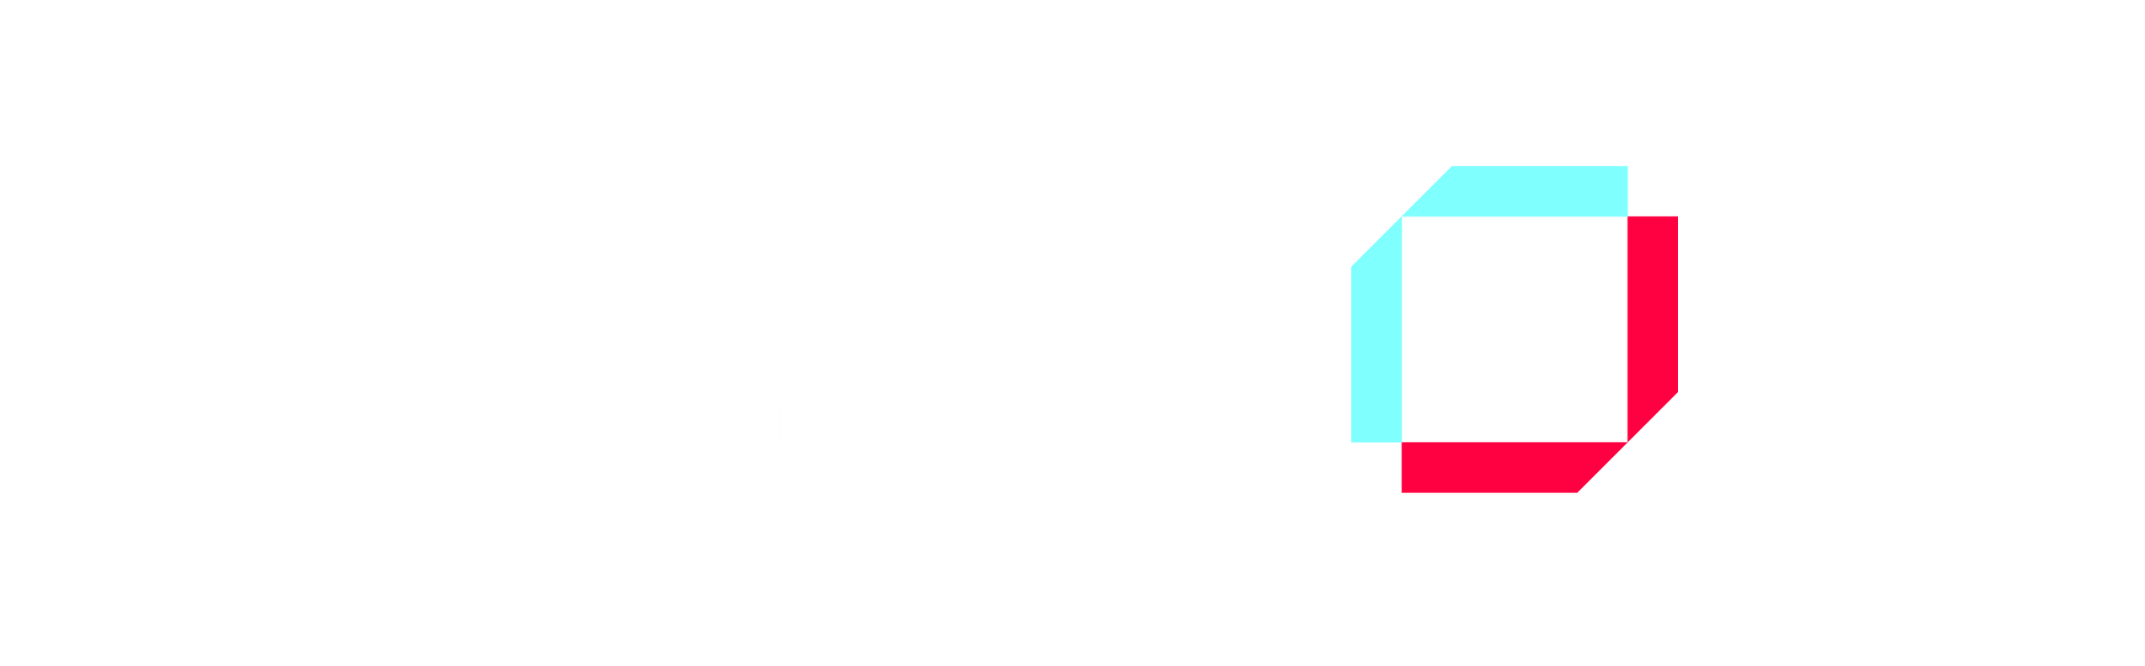 ArchLynk-Website-Logo